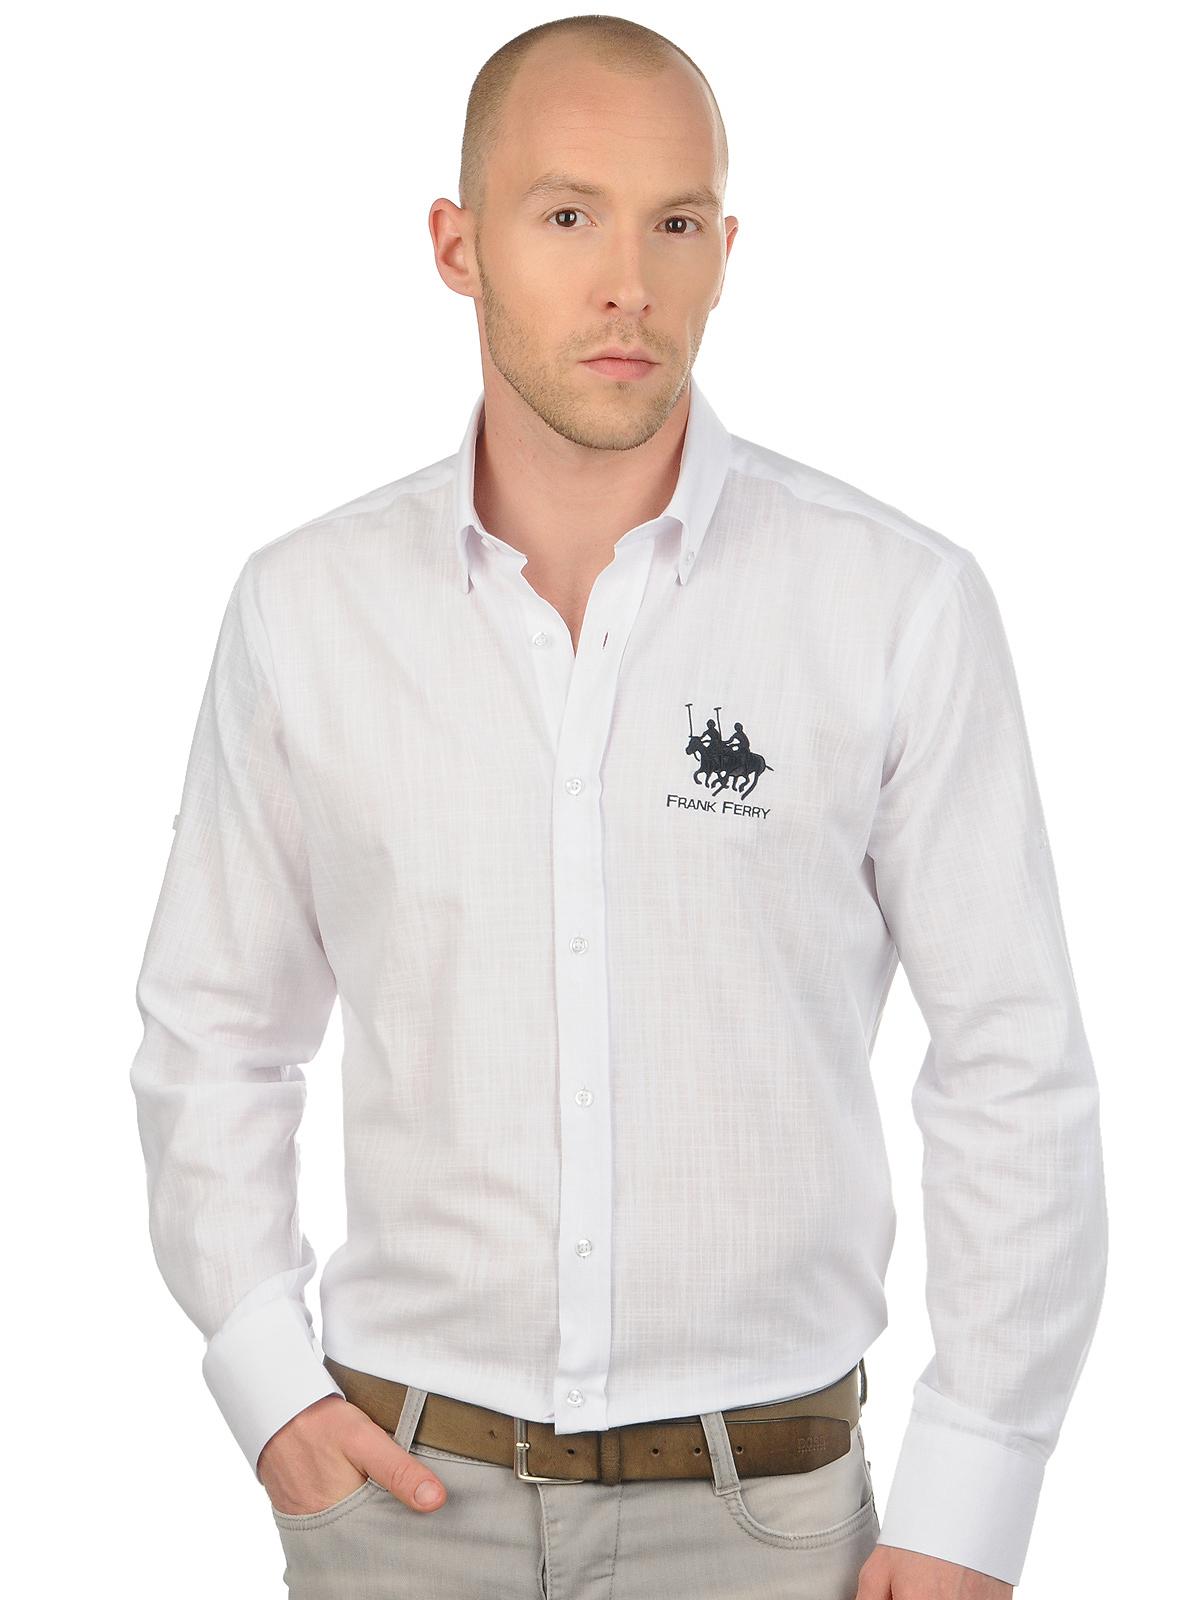 Foto Frank Ferry Polo Club Camisa Regular Fit blanco M